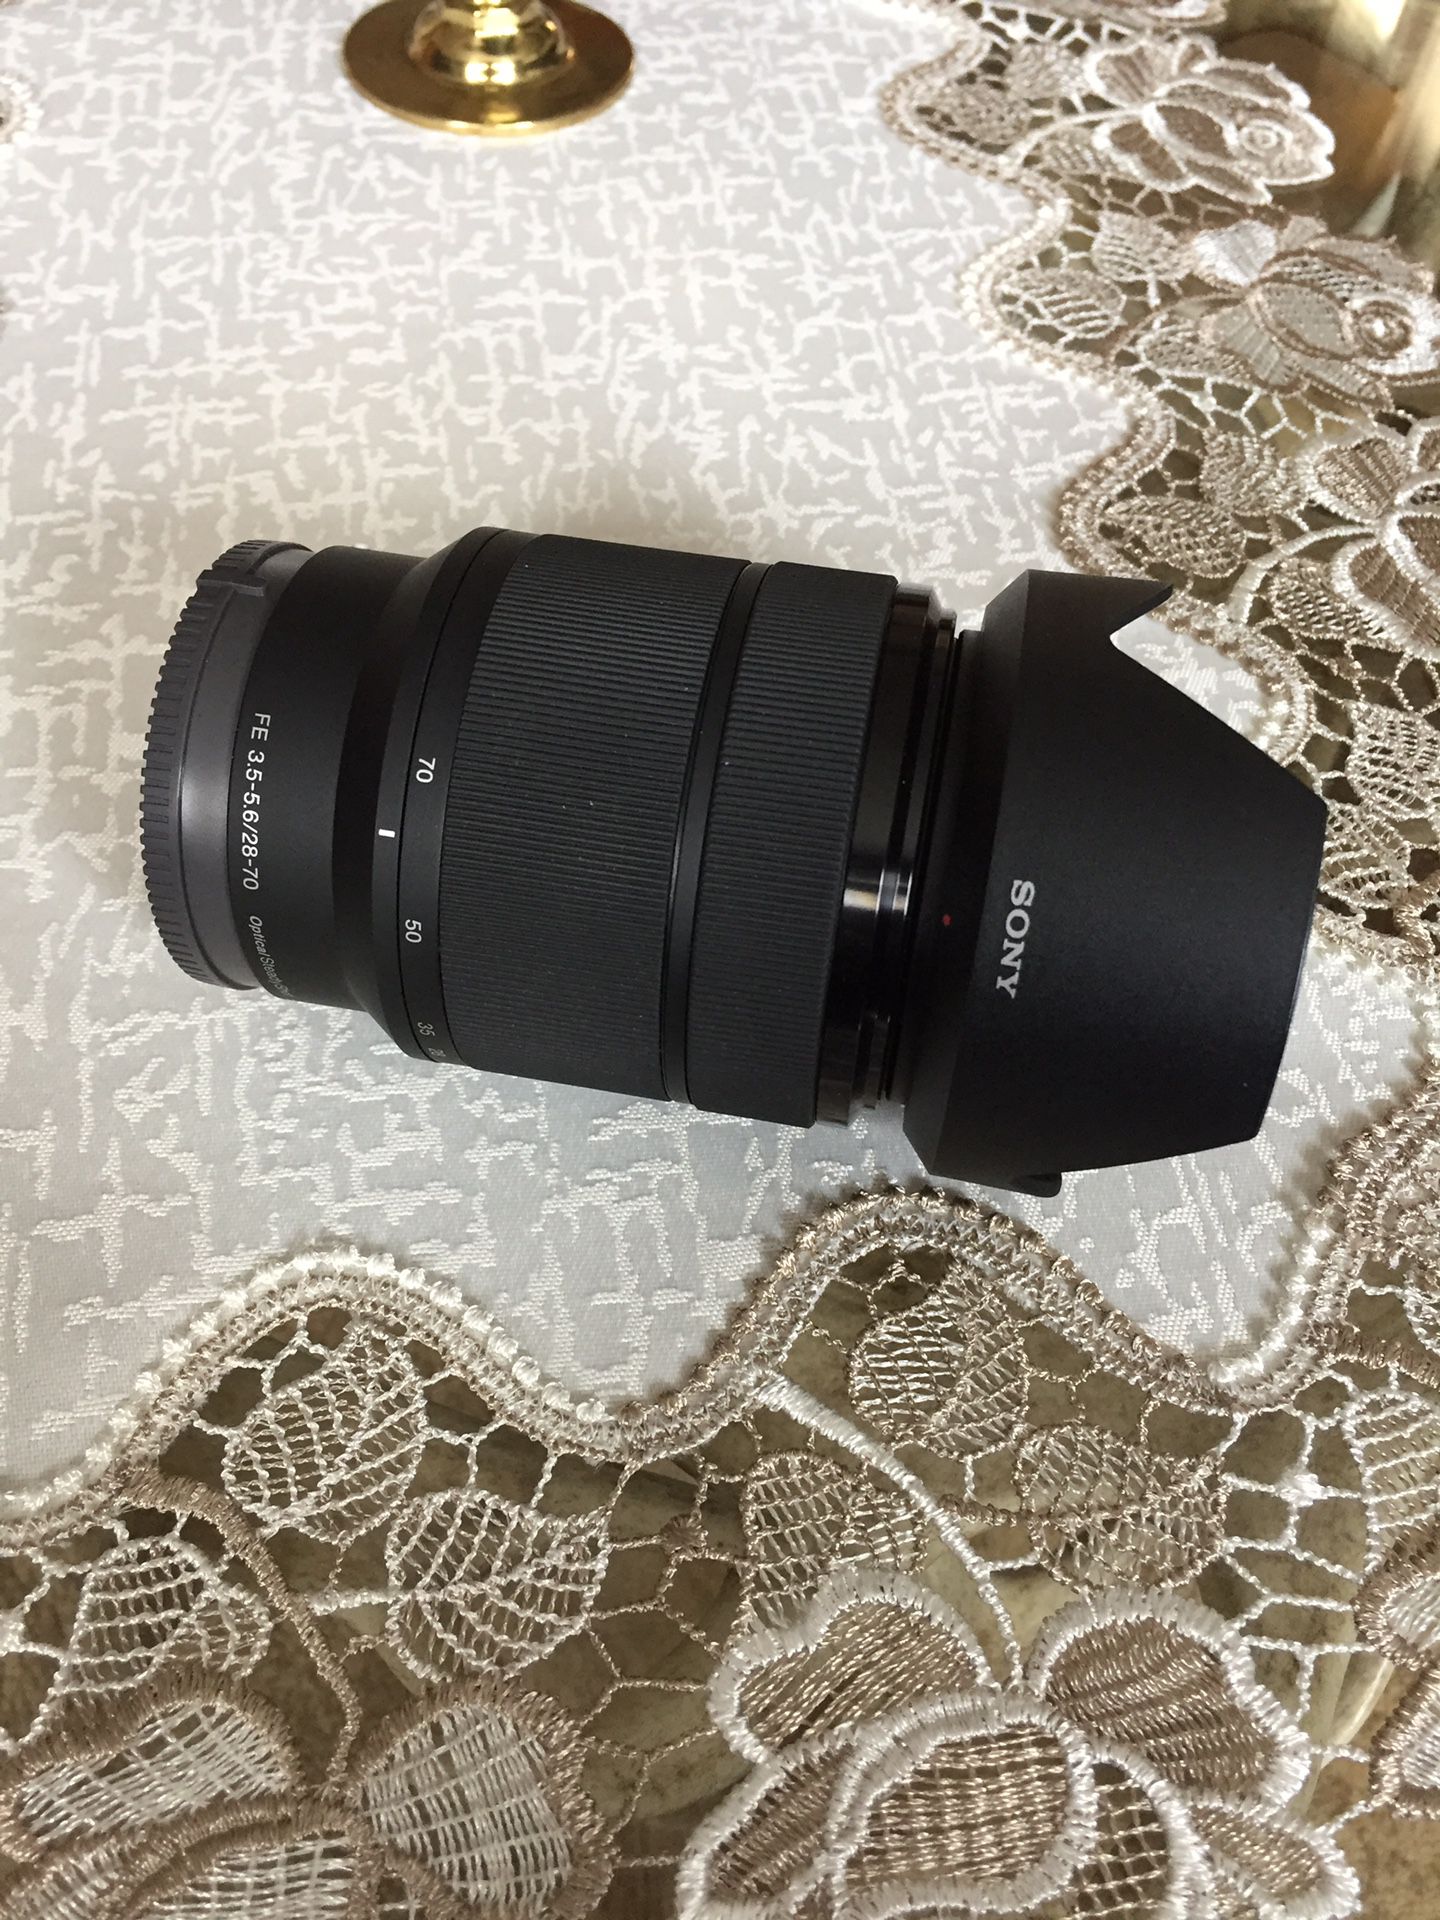 Sony lens. 28-70